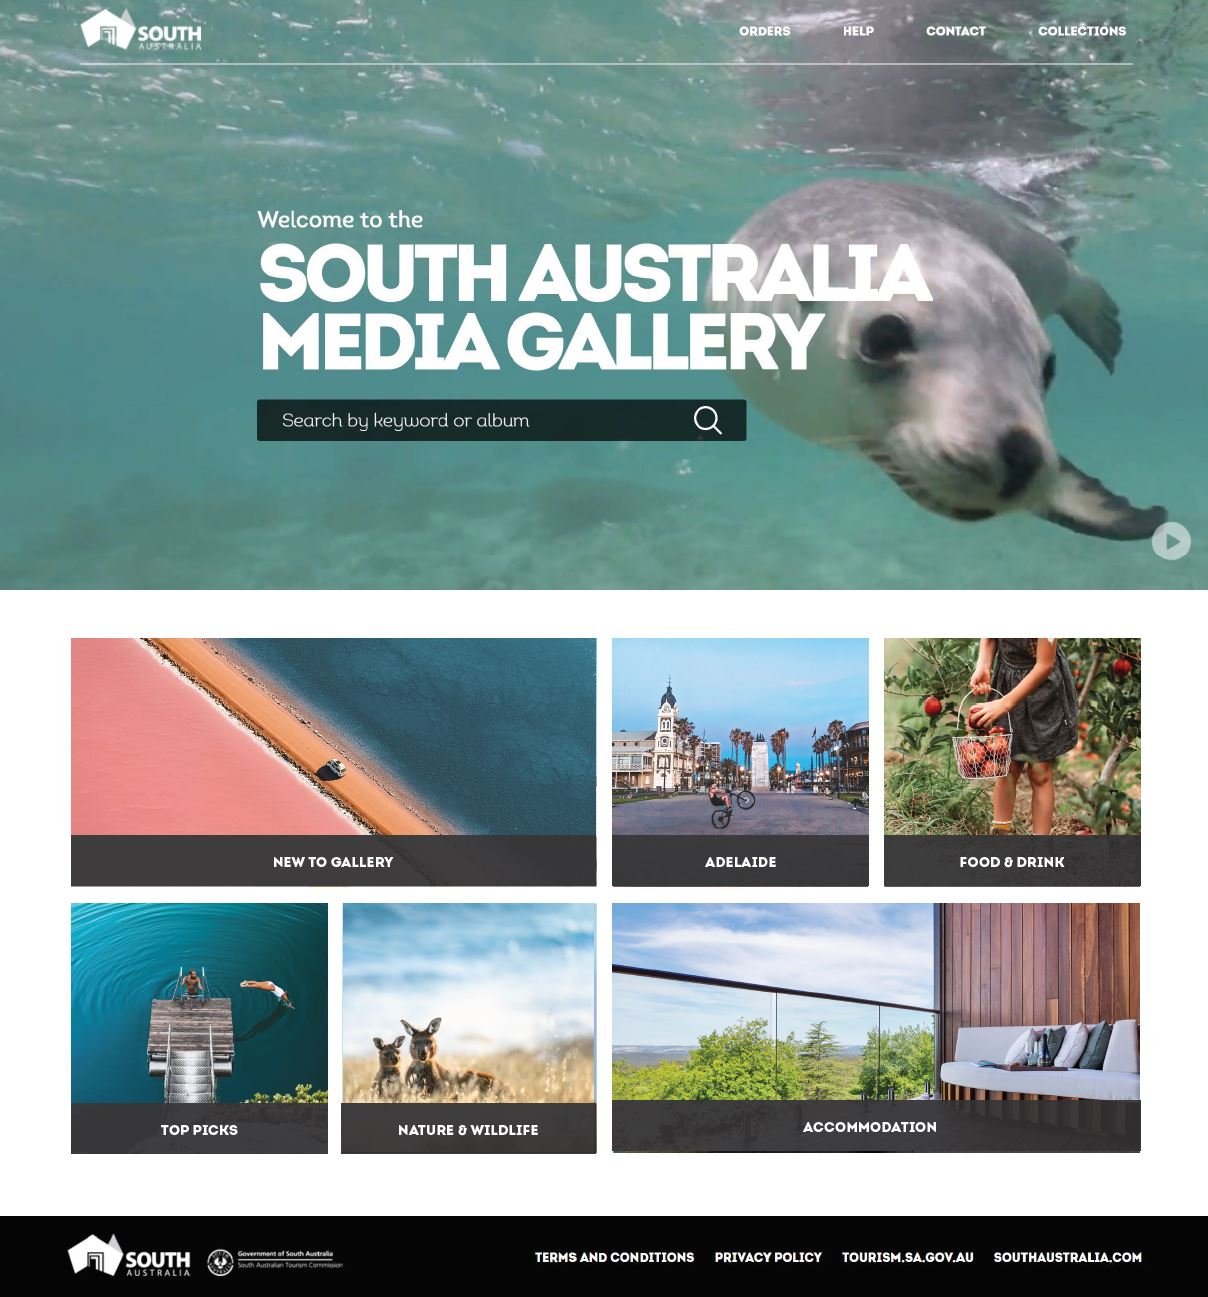 Glat Skyldfølelse ingeniørarbejde Working with DAM: South Australian Tourism Commission Experience